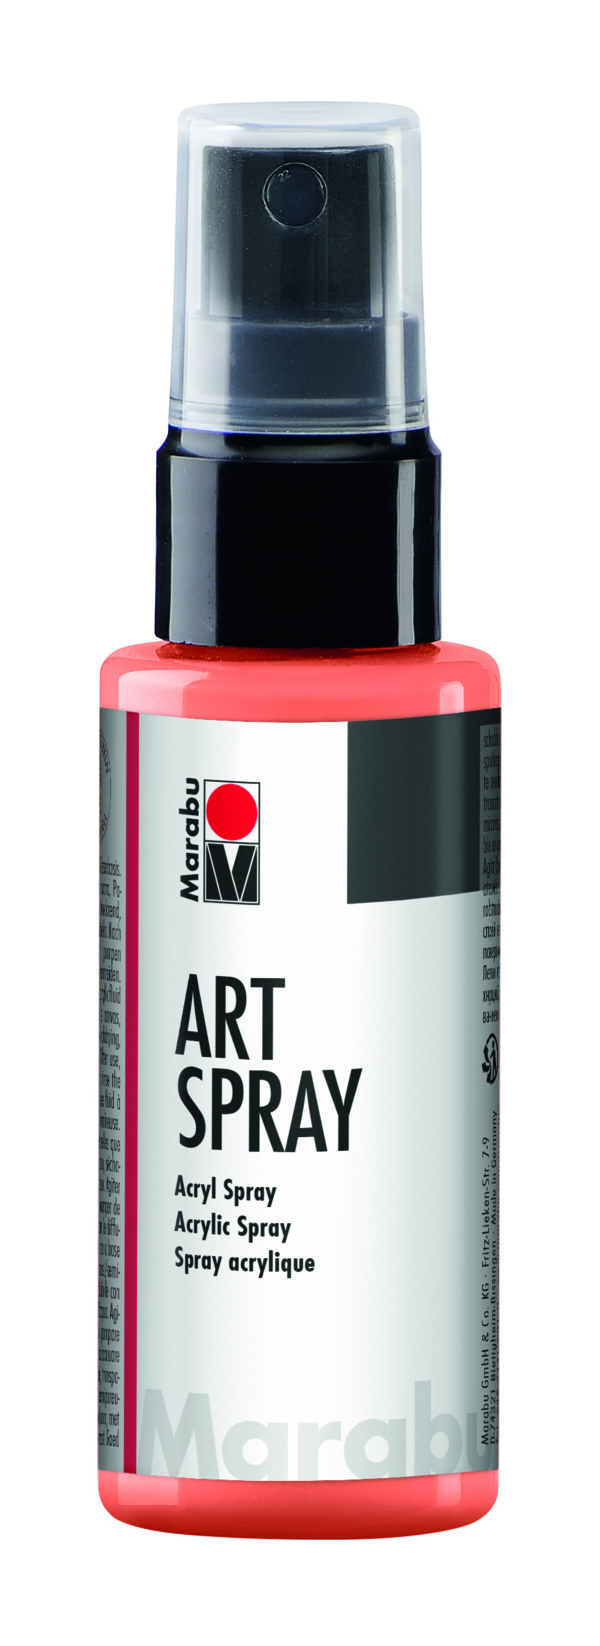 Rotorange - Art Spray